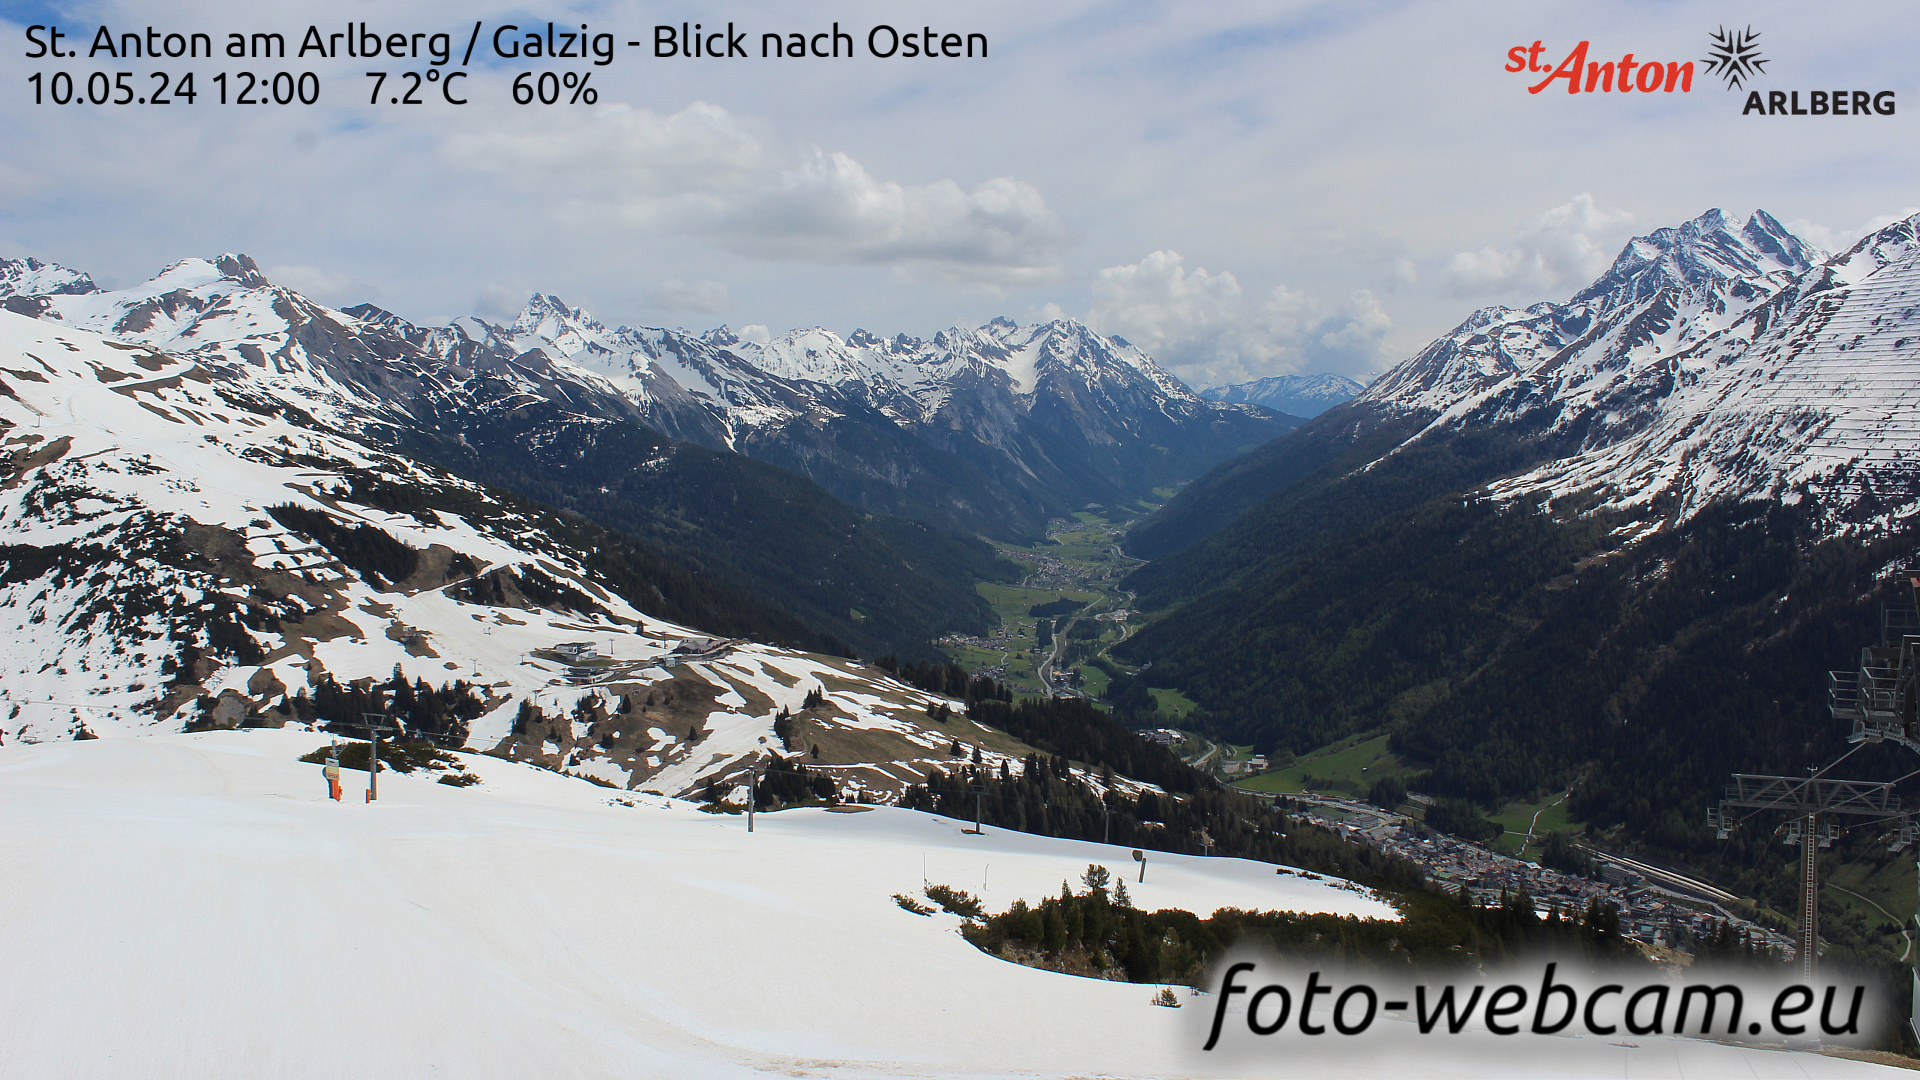 St. Anton am Arlberg So. 12:01